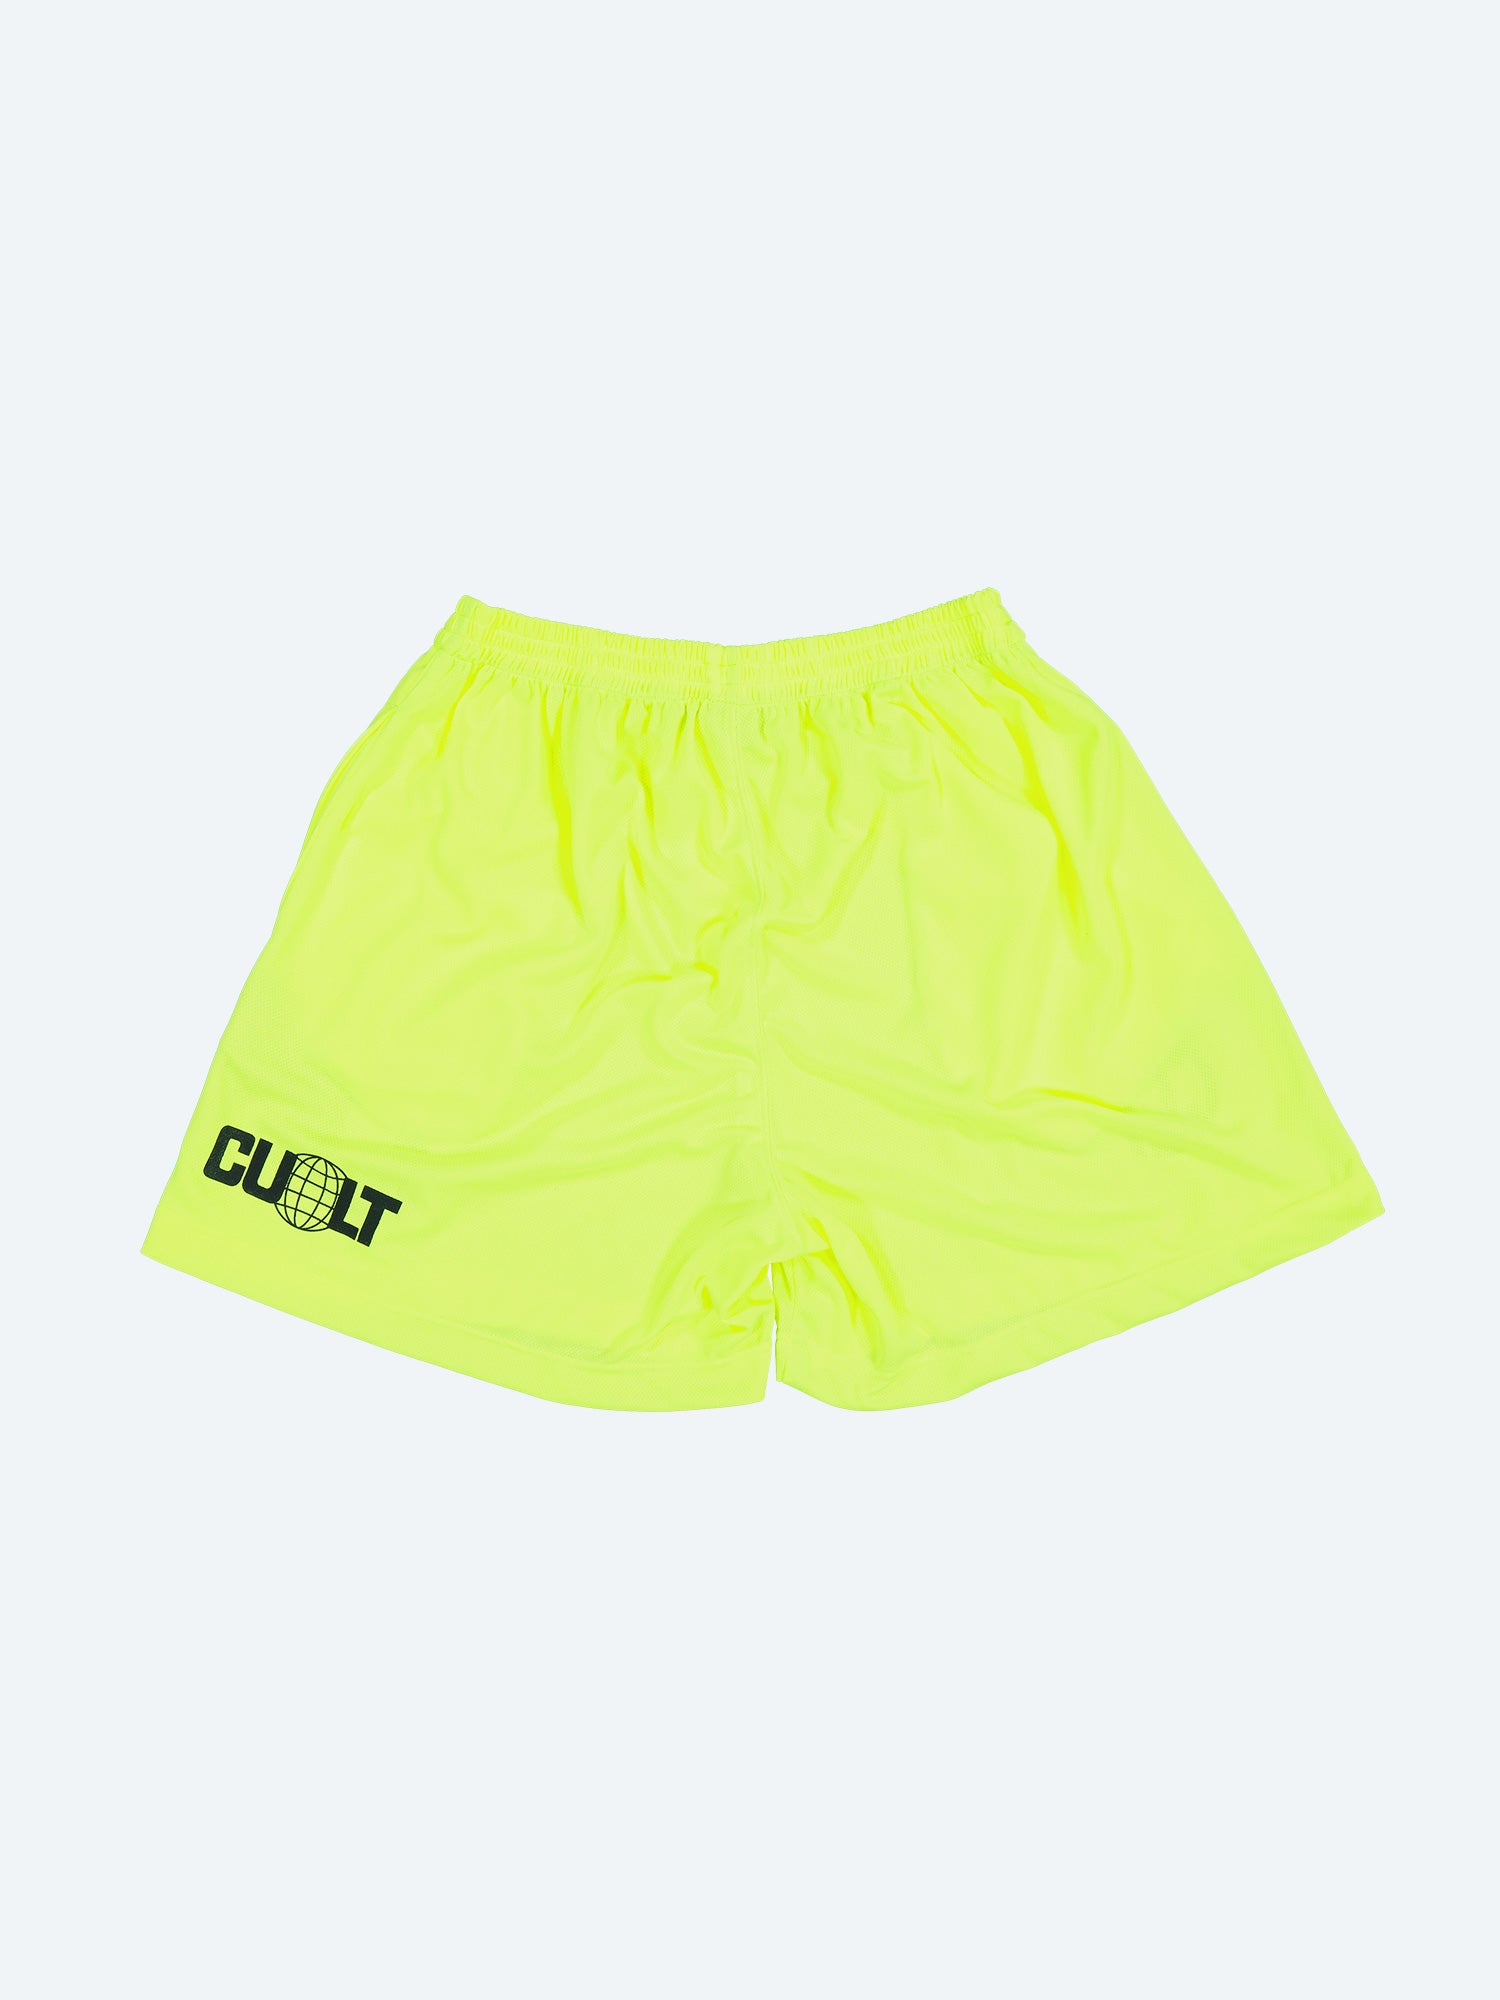 CCF Away Shorts / Neon Yellow